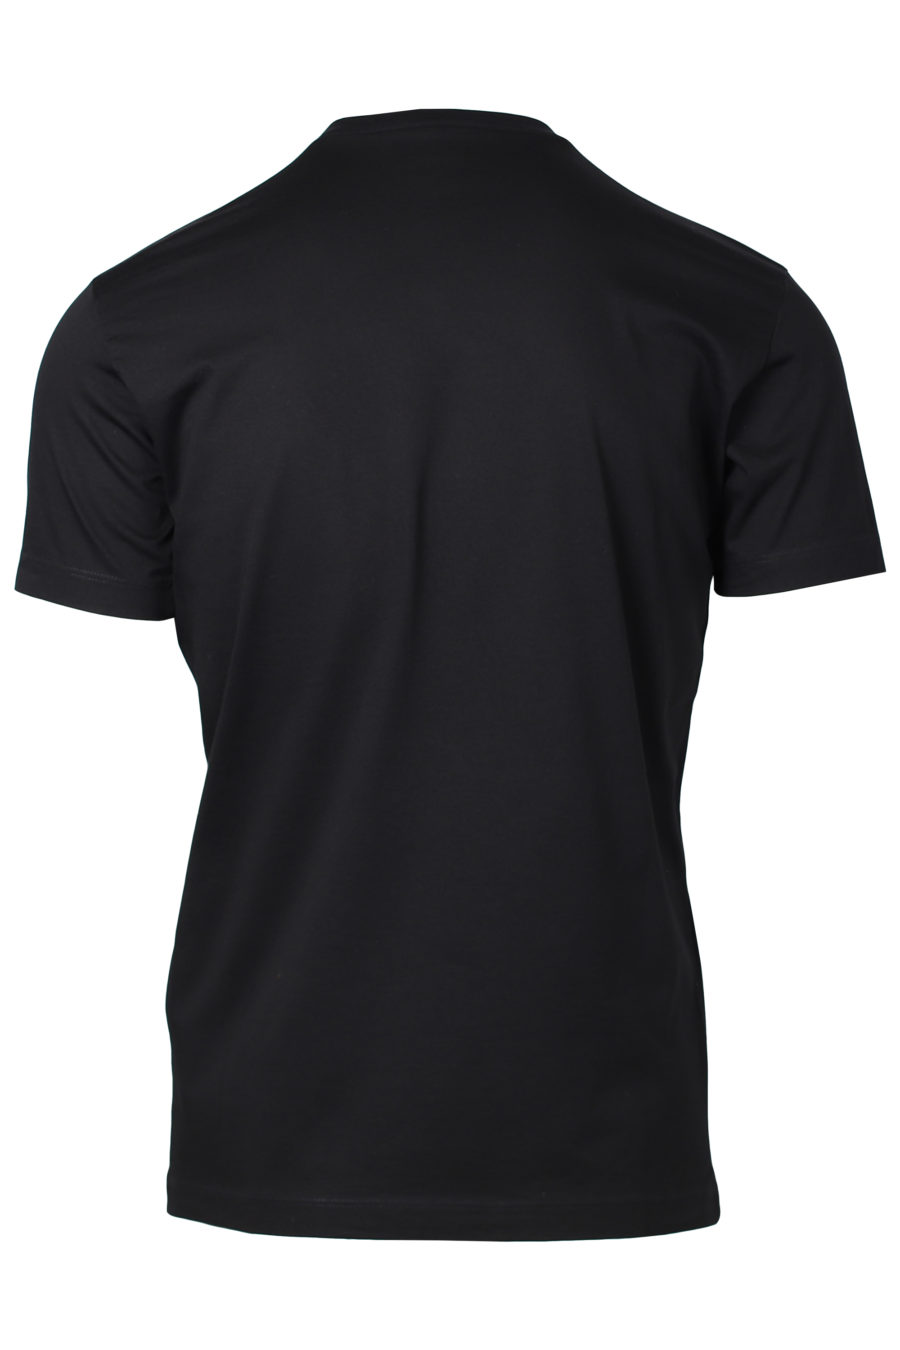 Camiseta negra con estampado hoja - IMG 2219